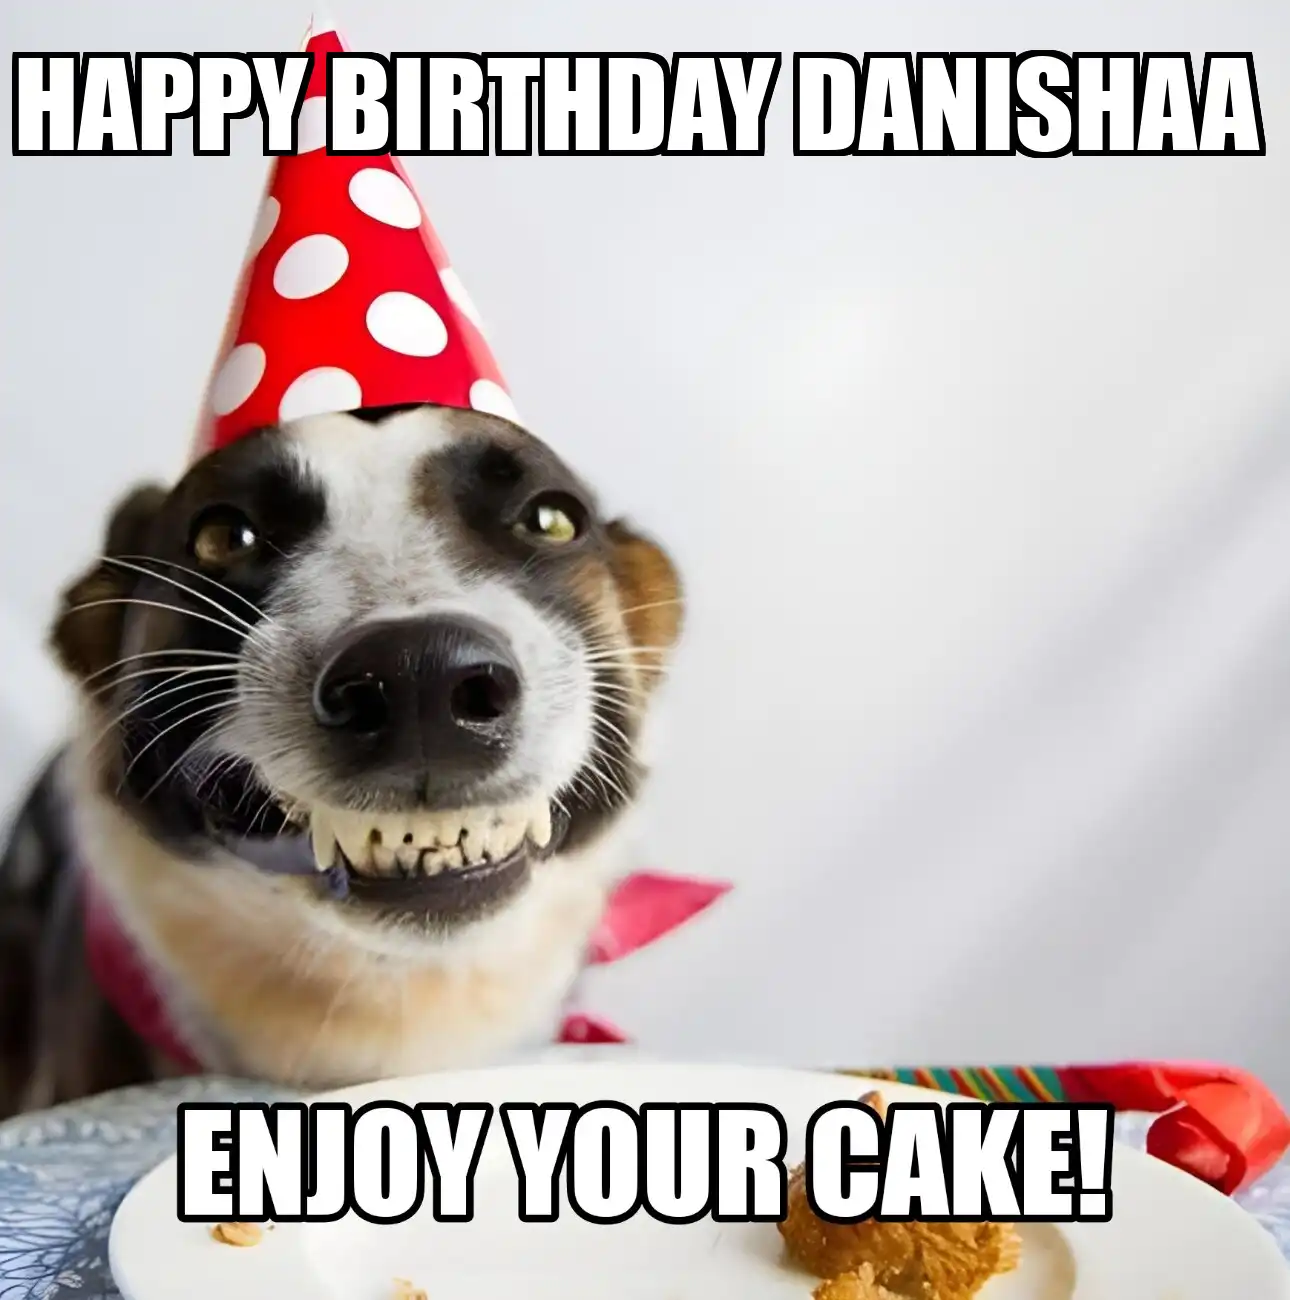 Happy Birthday Danishaa Enjoy Your Cake Dog Meme